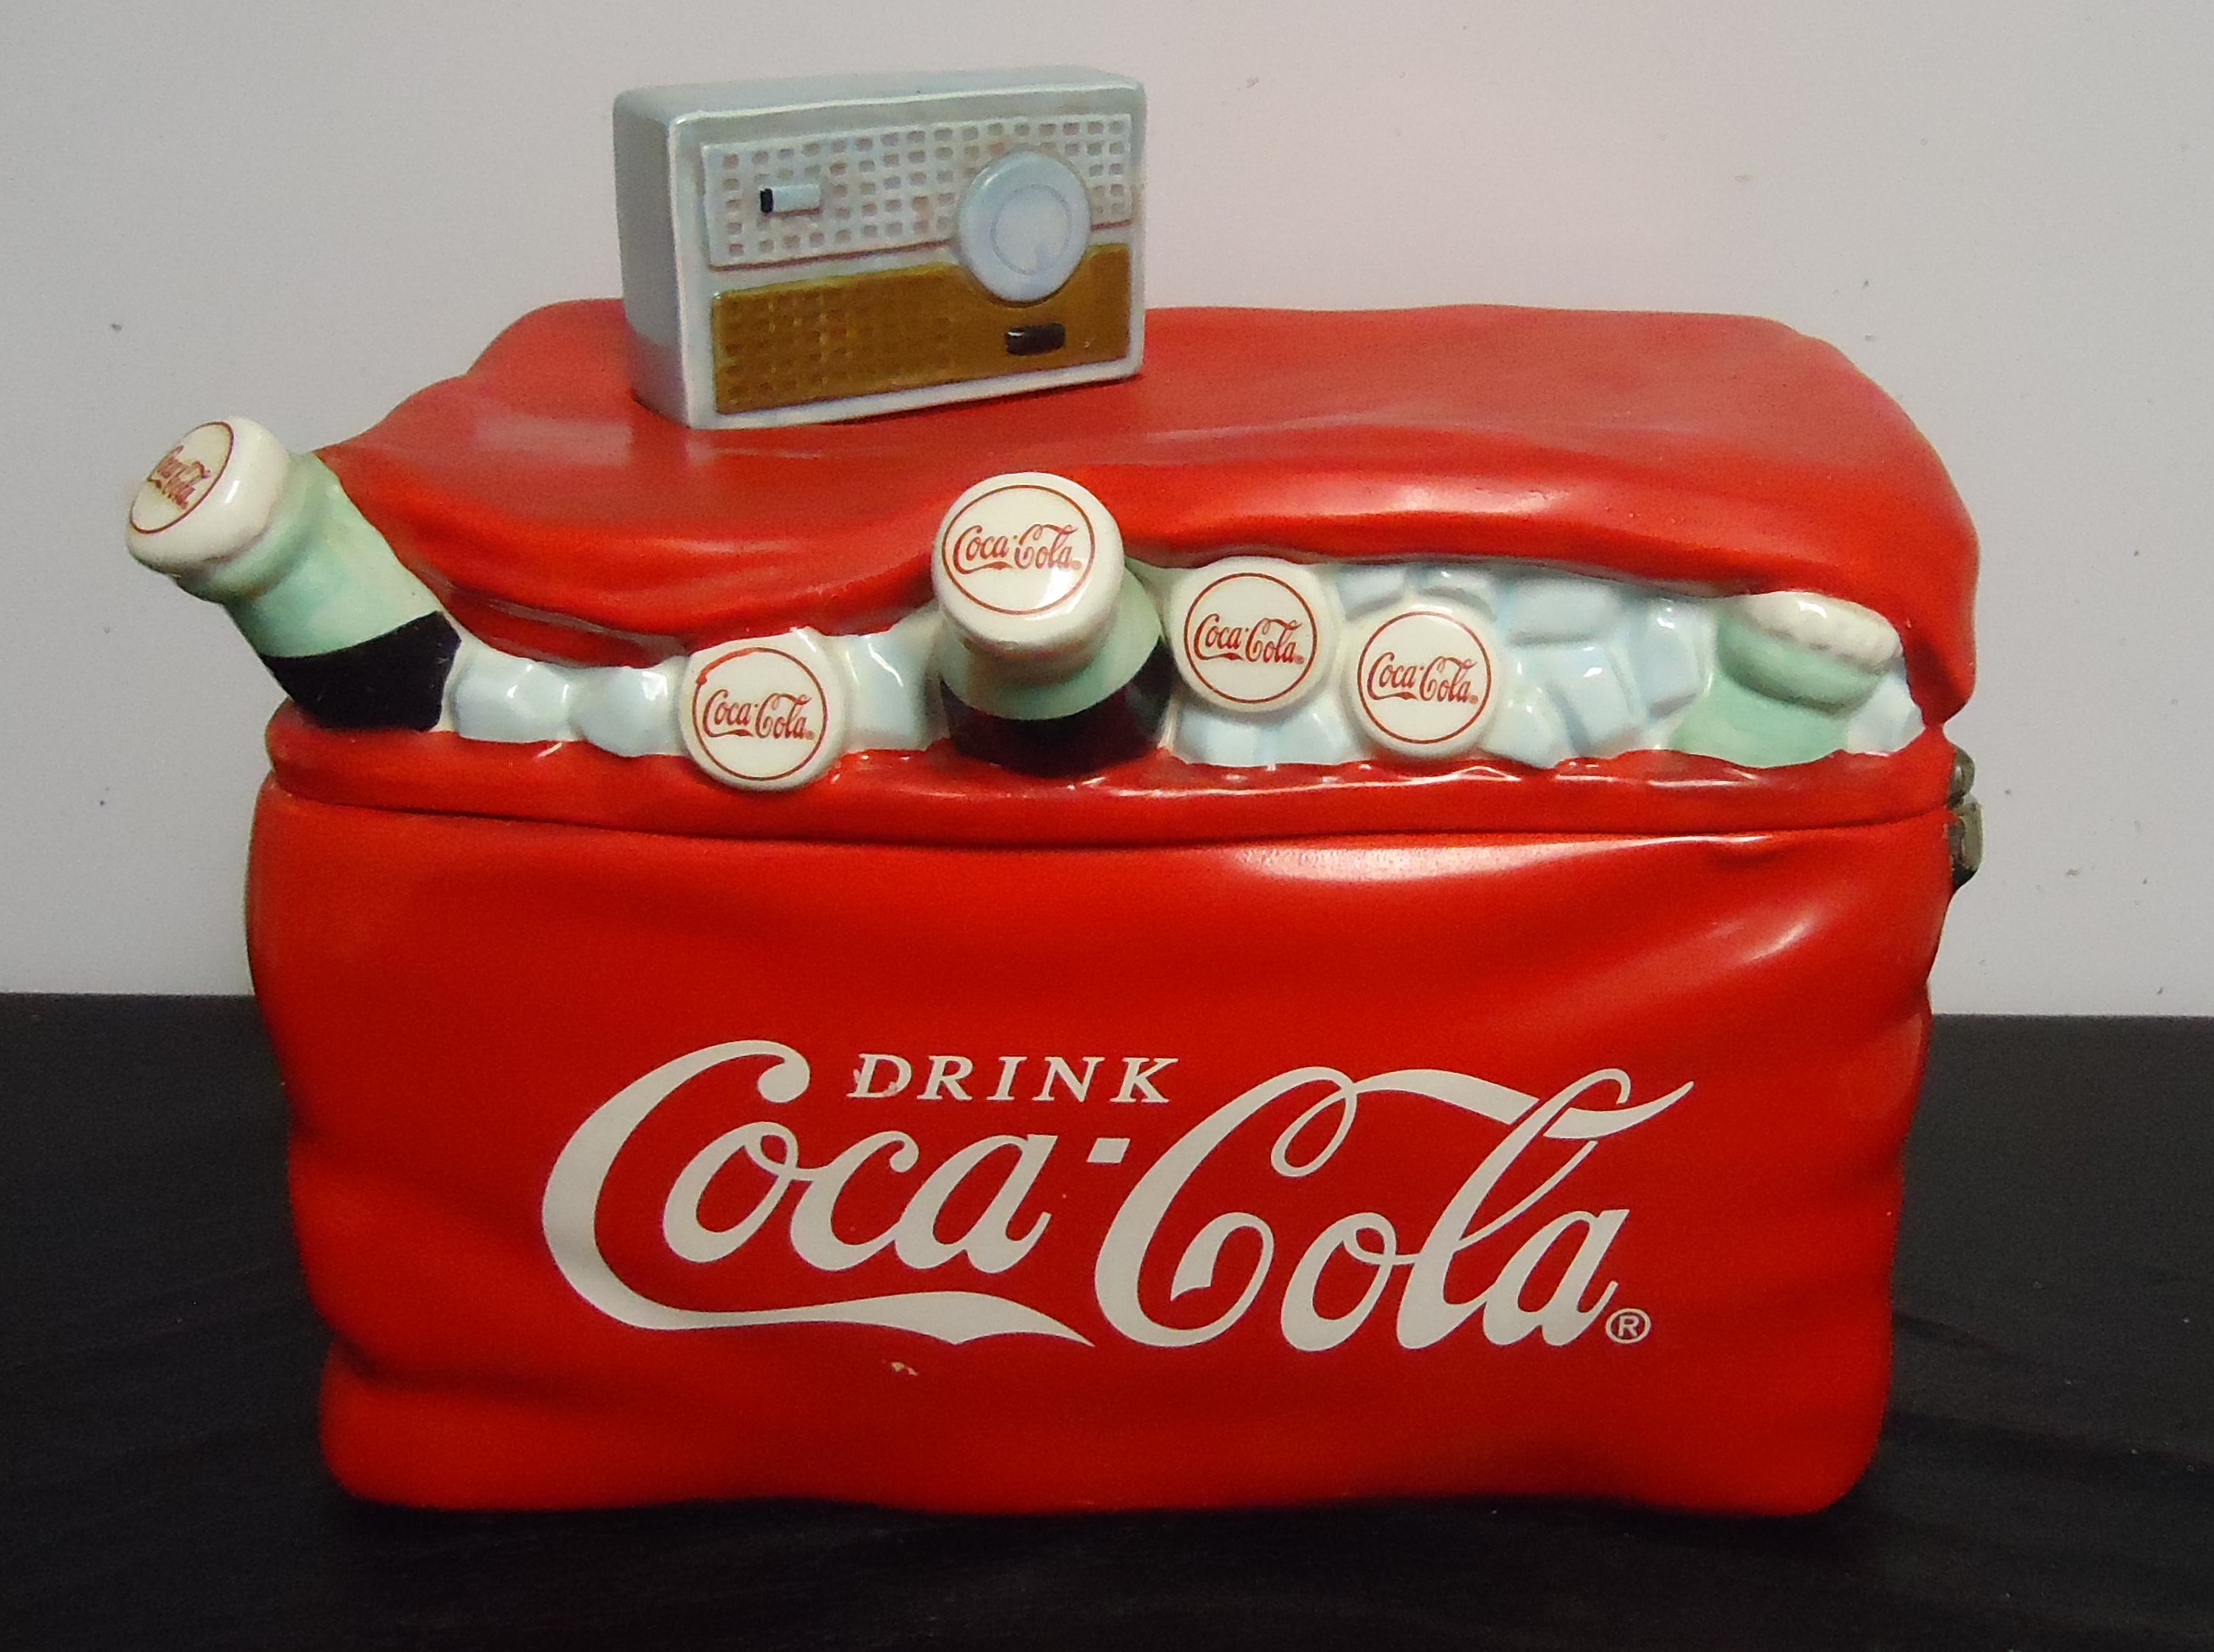 (3) "Vintage" Coca-Cola (Red Cooler)
Cookie Jar 
$60.00